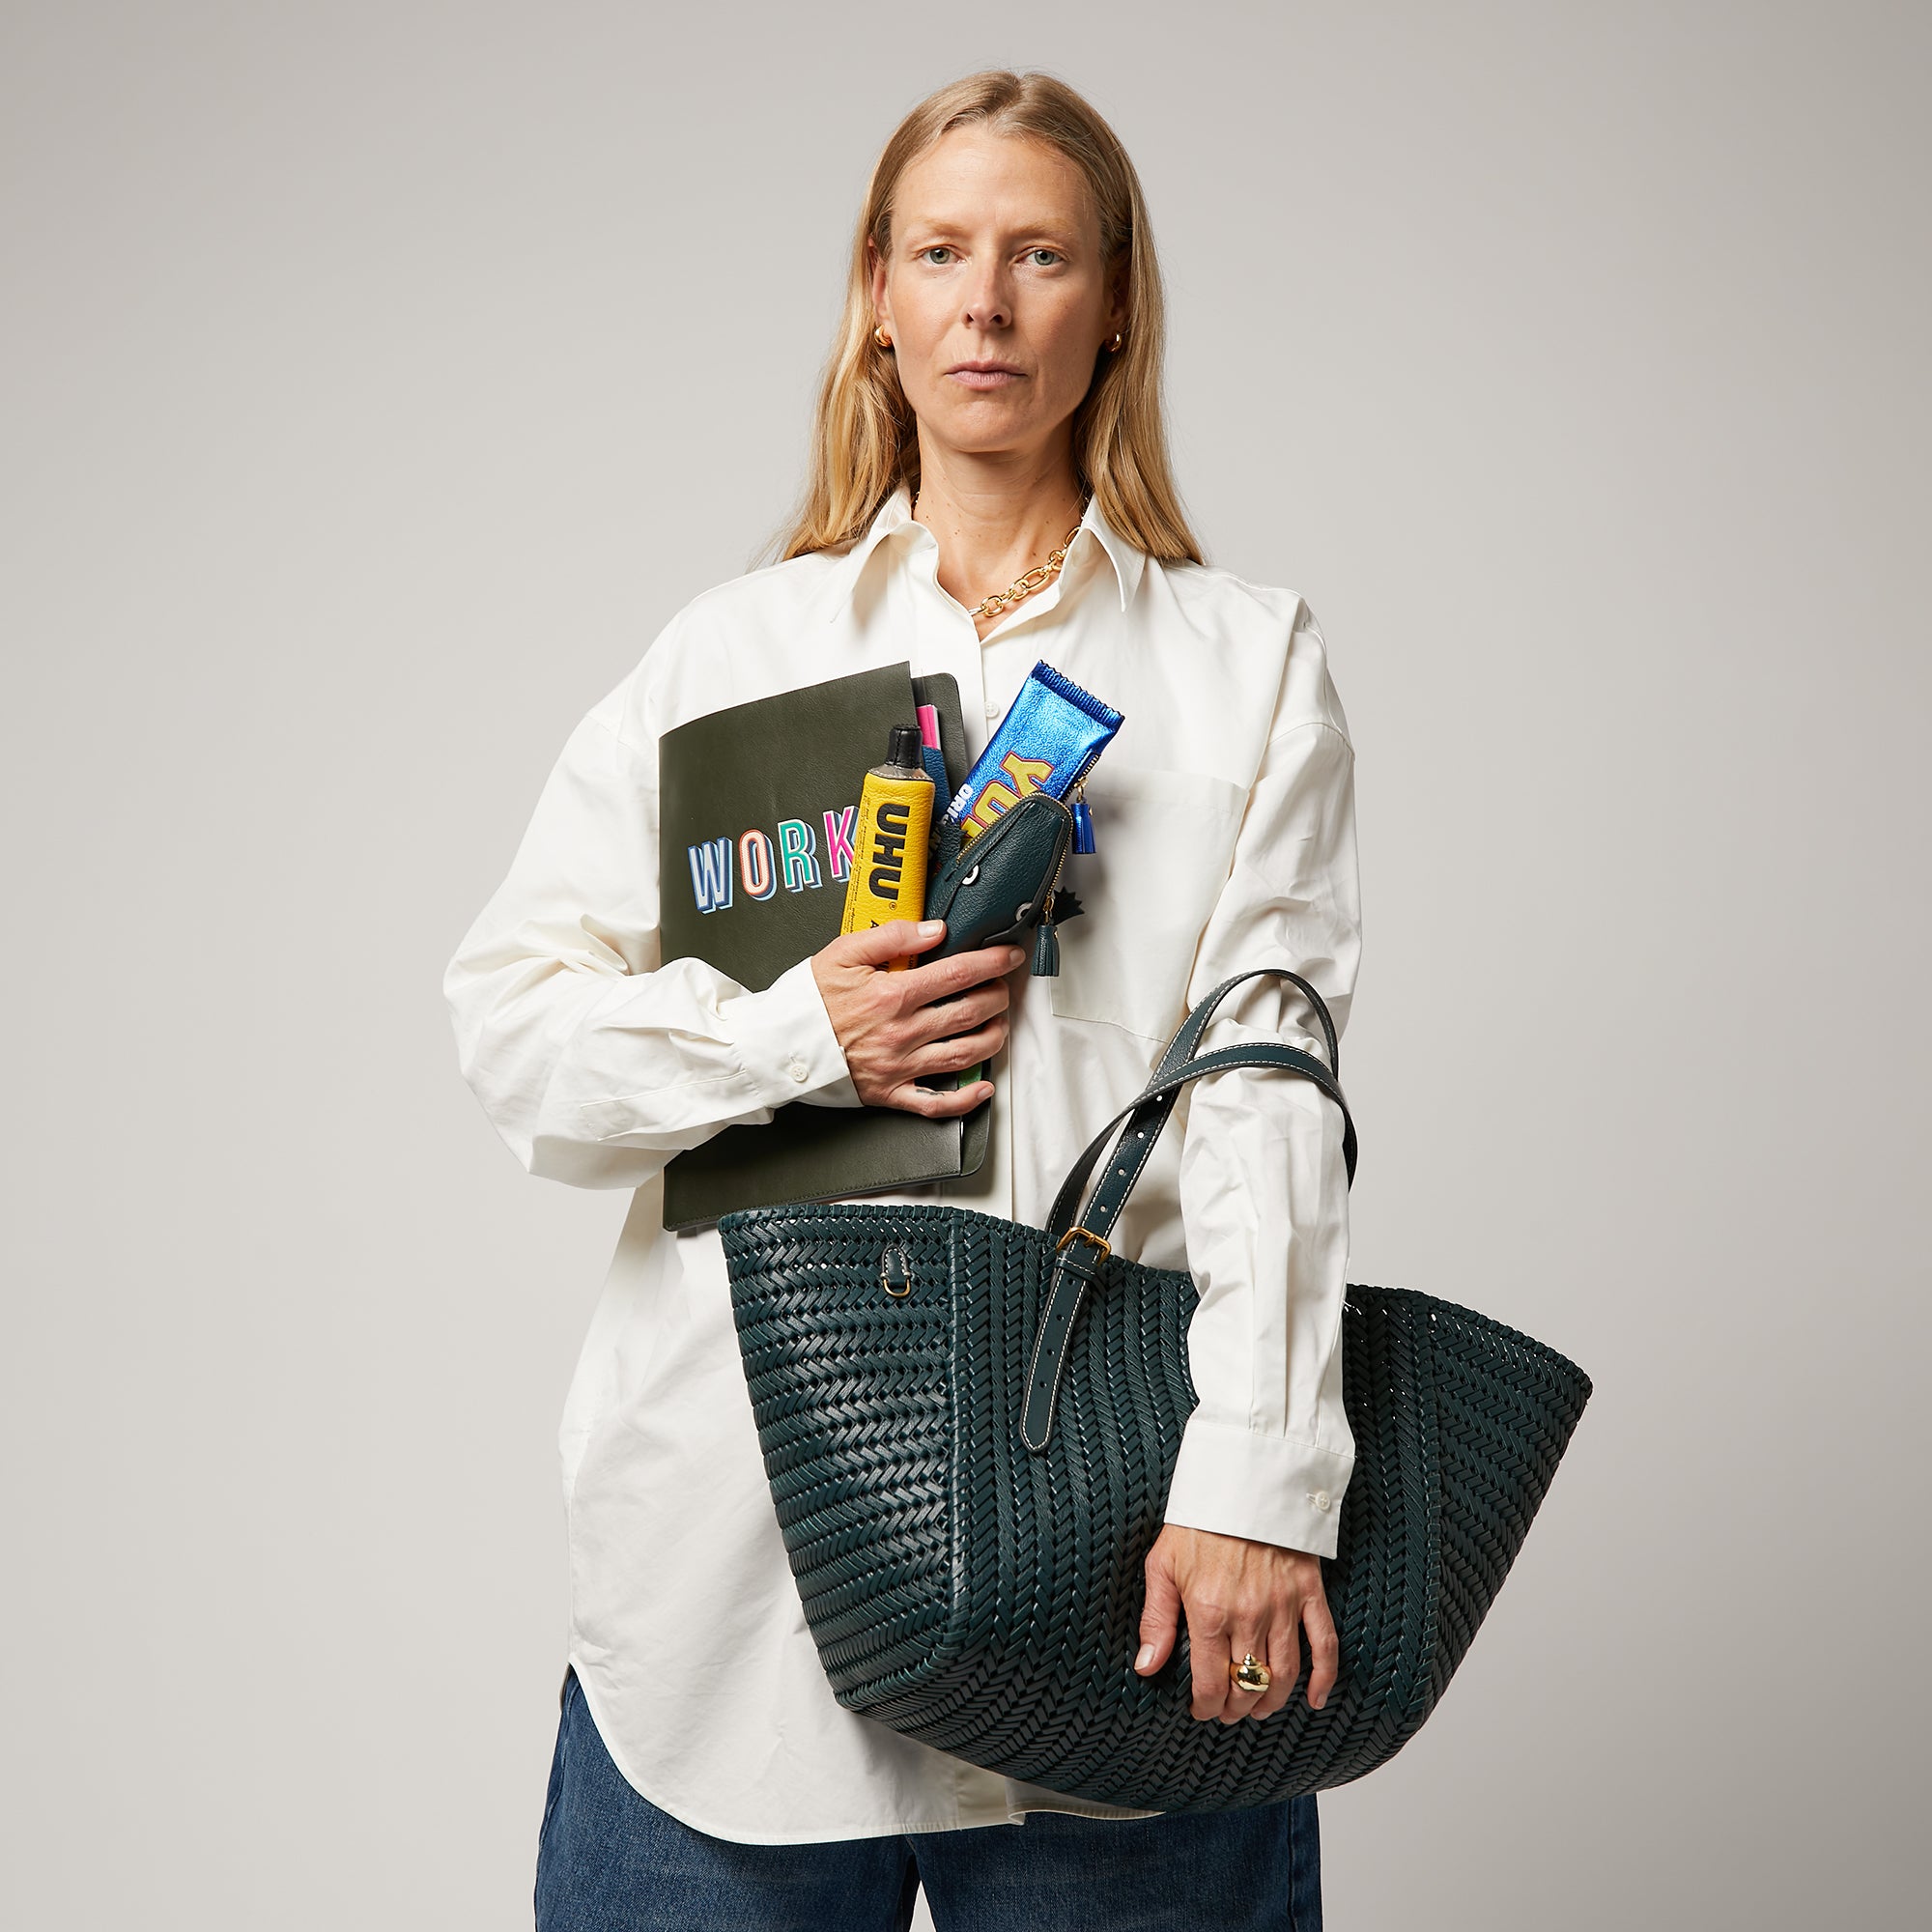 Anya Hindmarch | Luxury Designer Handbags and Accessories | Anya